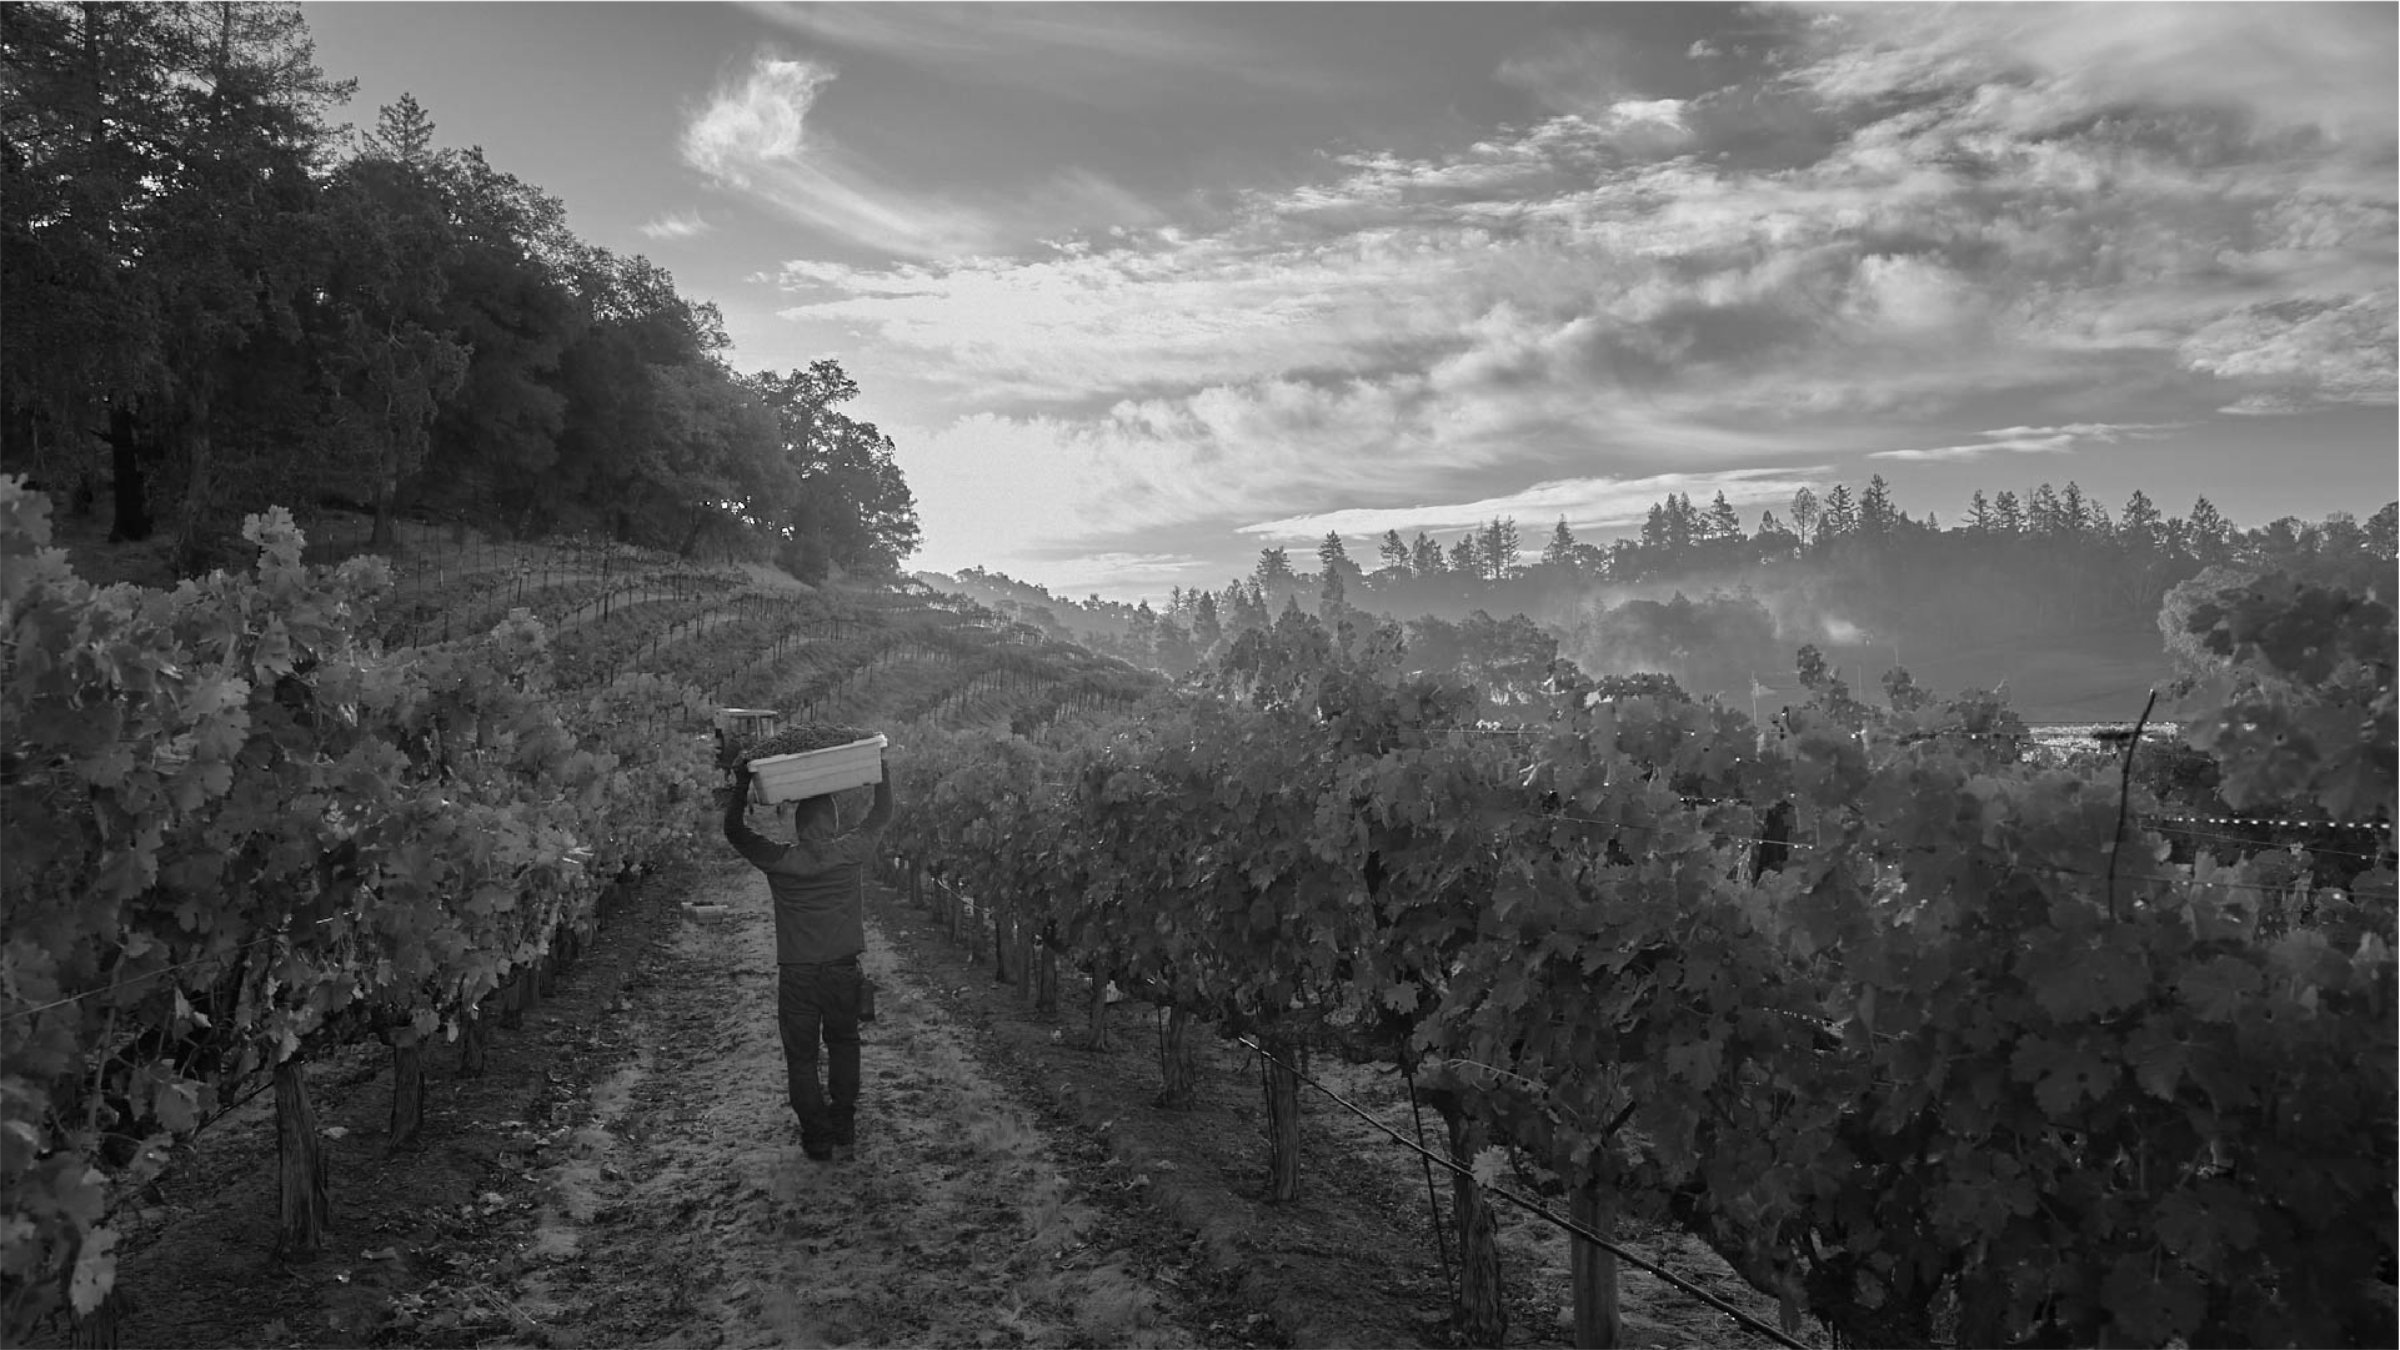 Worker in the vineyards